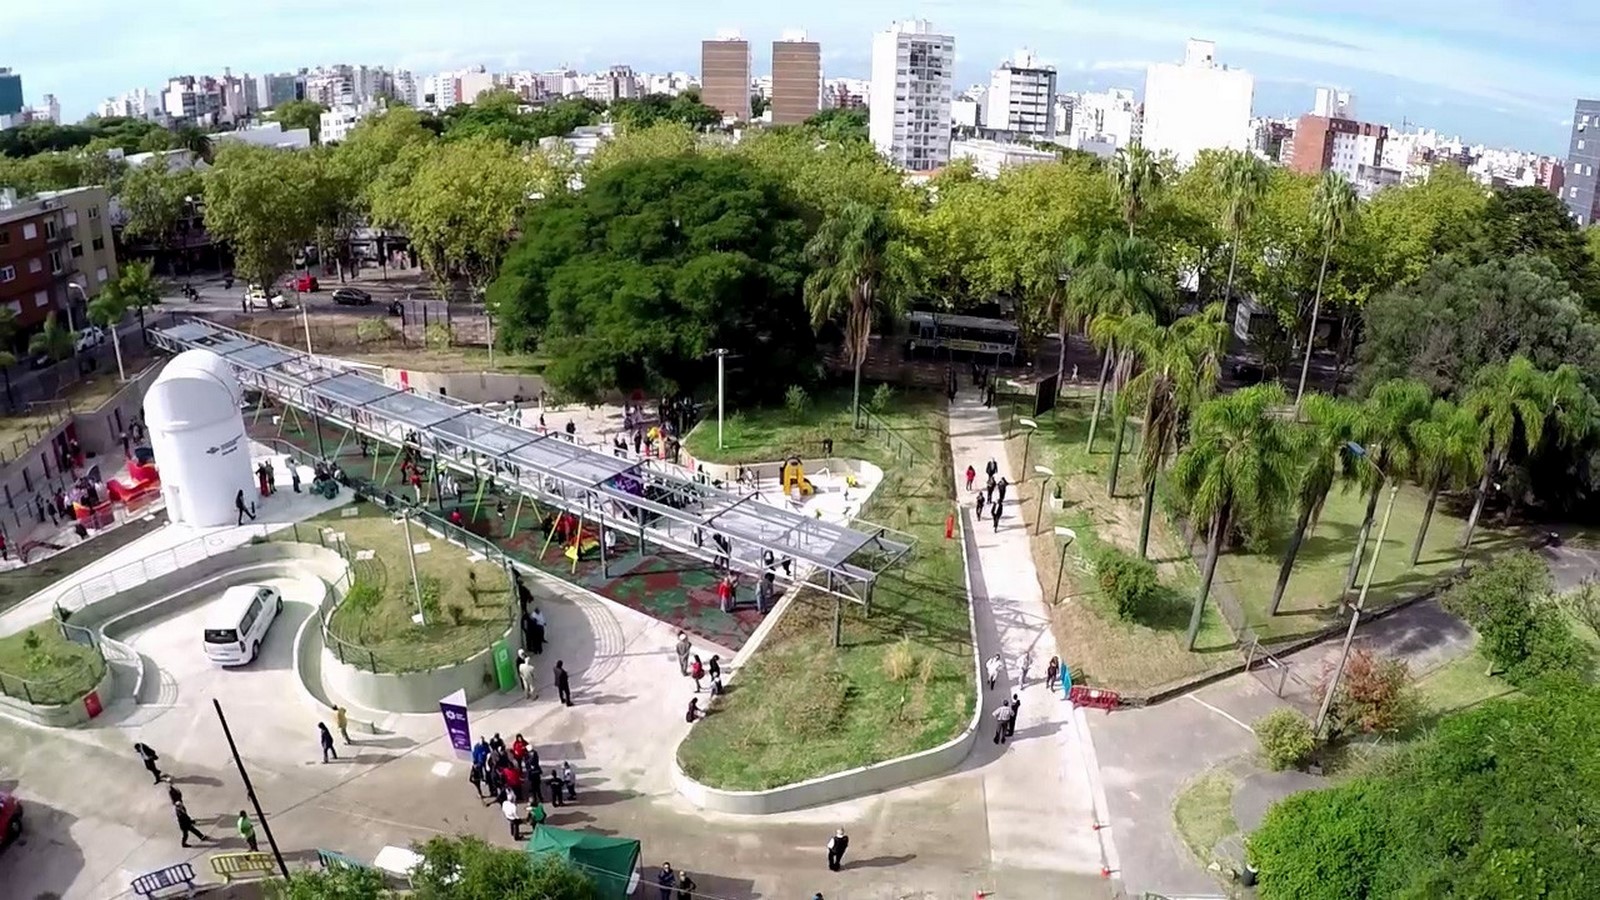 The Friendship Park, Montevideo - Sheet1